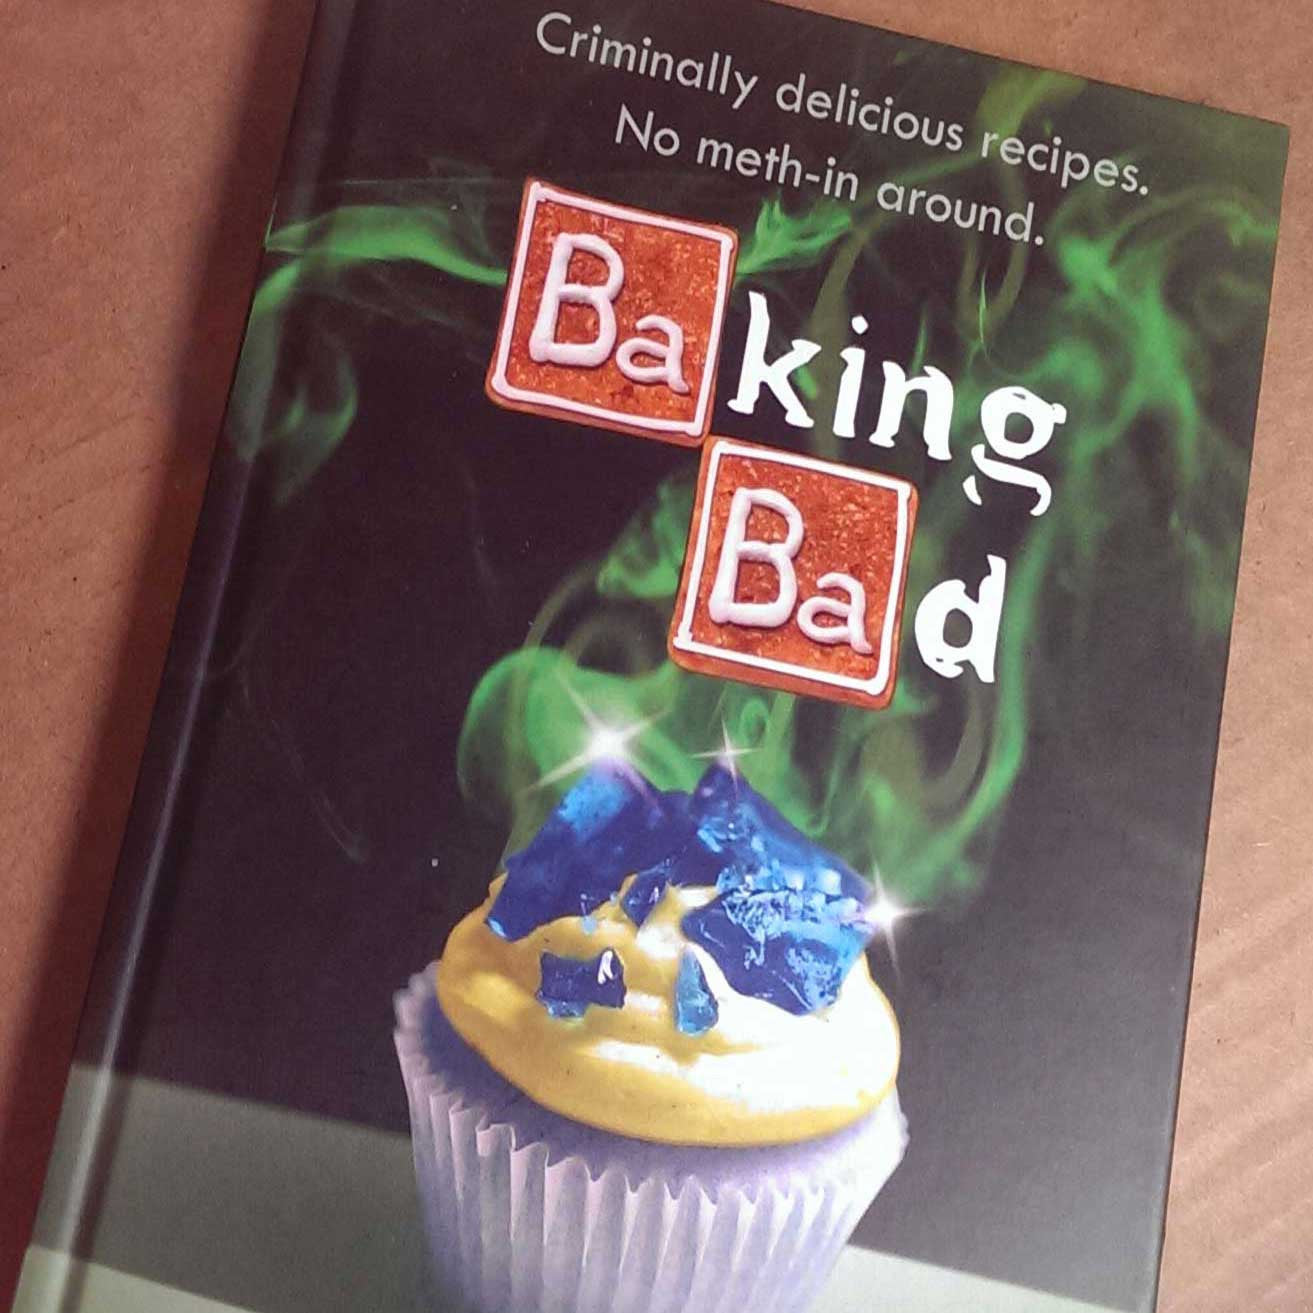 Baking Bad Cookbook - OddGifts.com